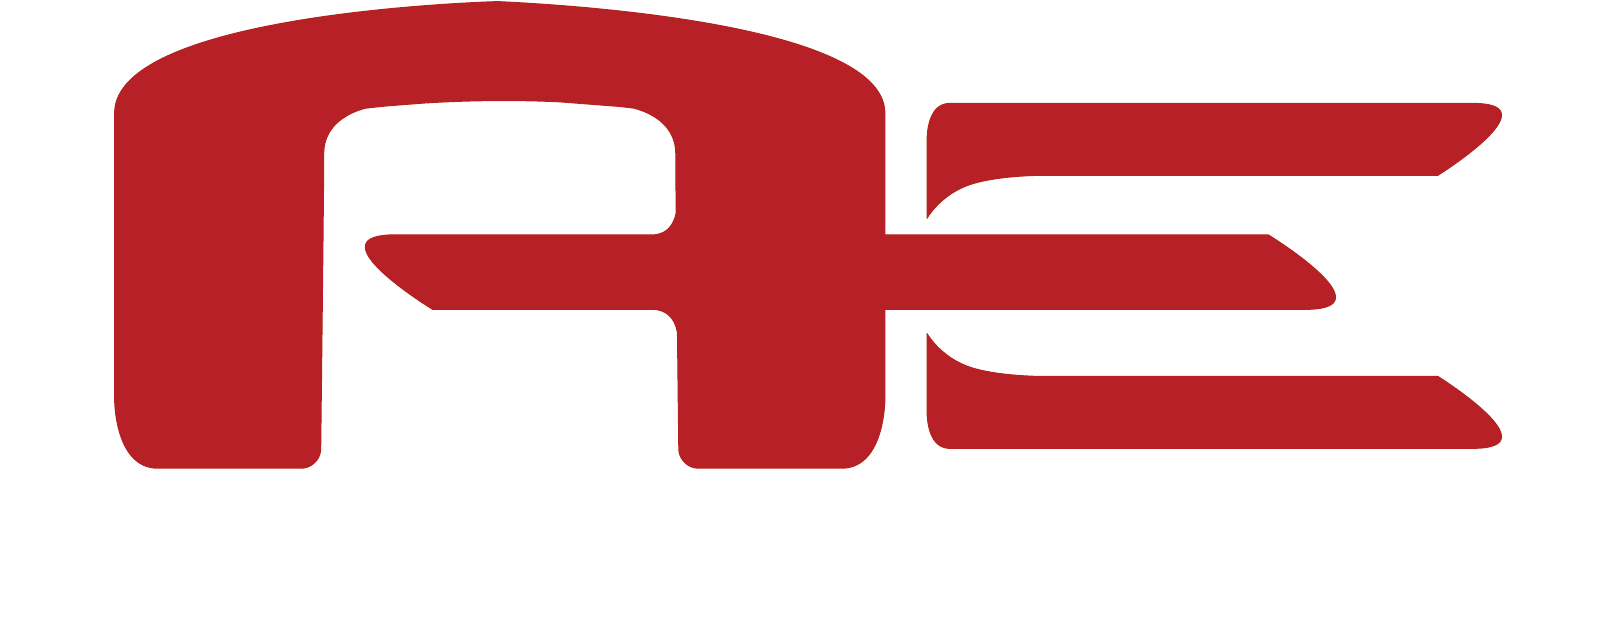 American Elevator Company